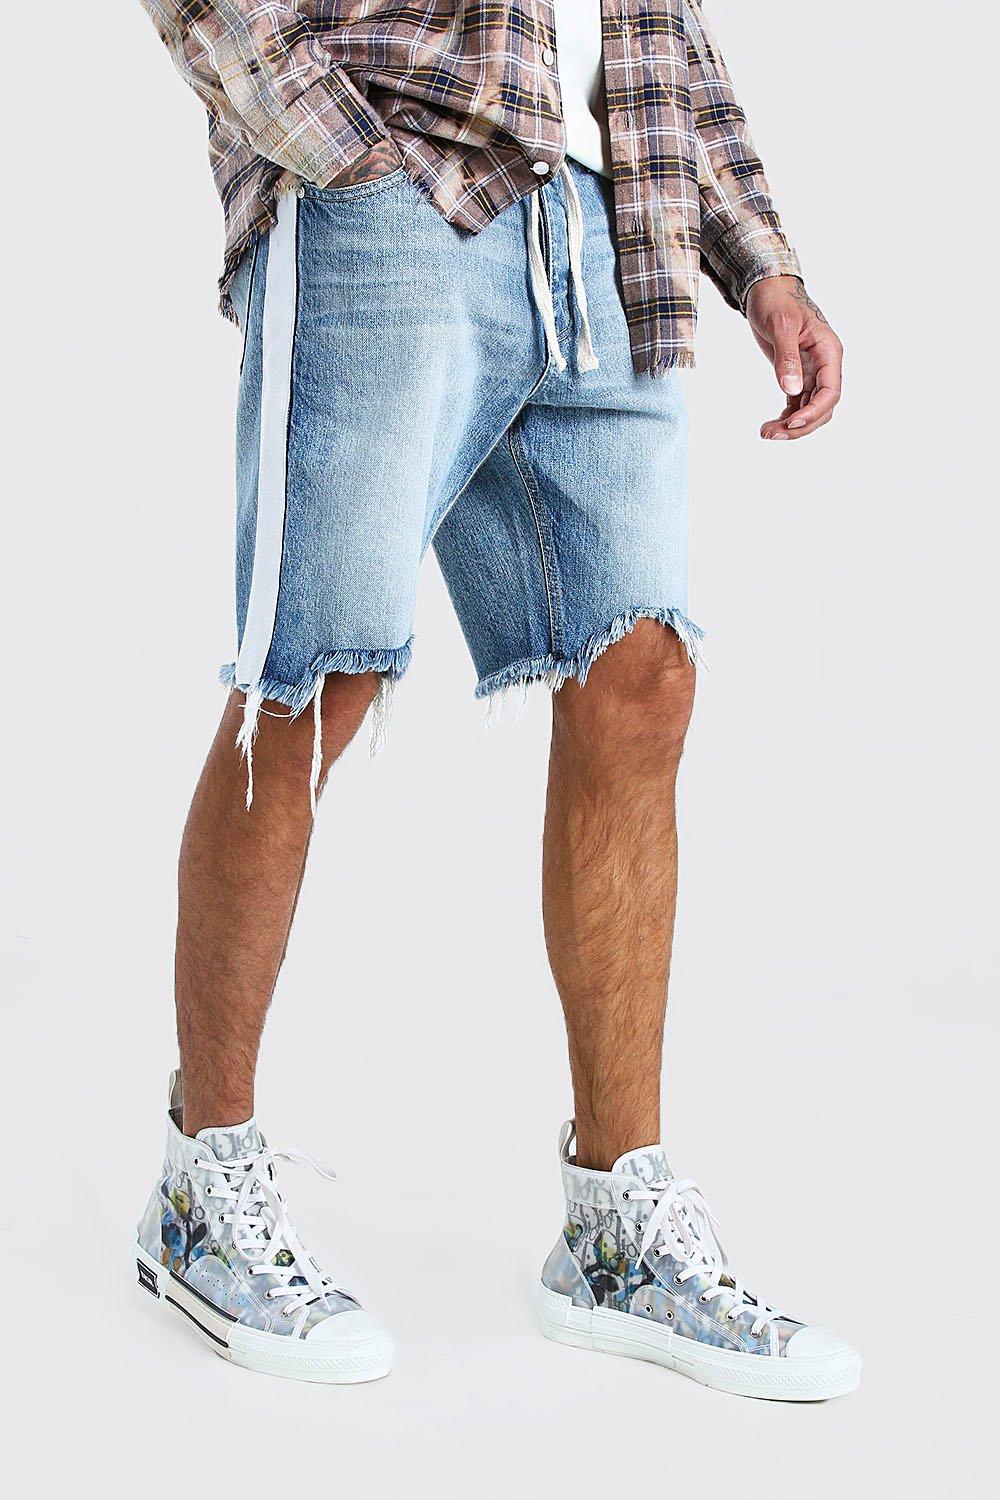 loose blue jean shorts